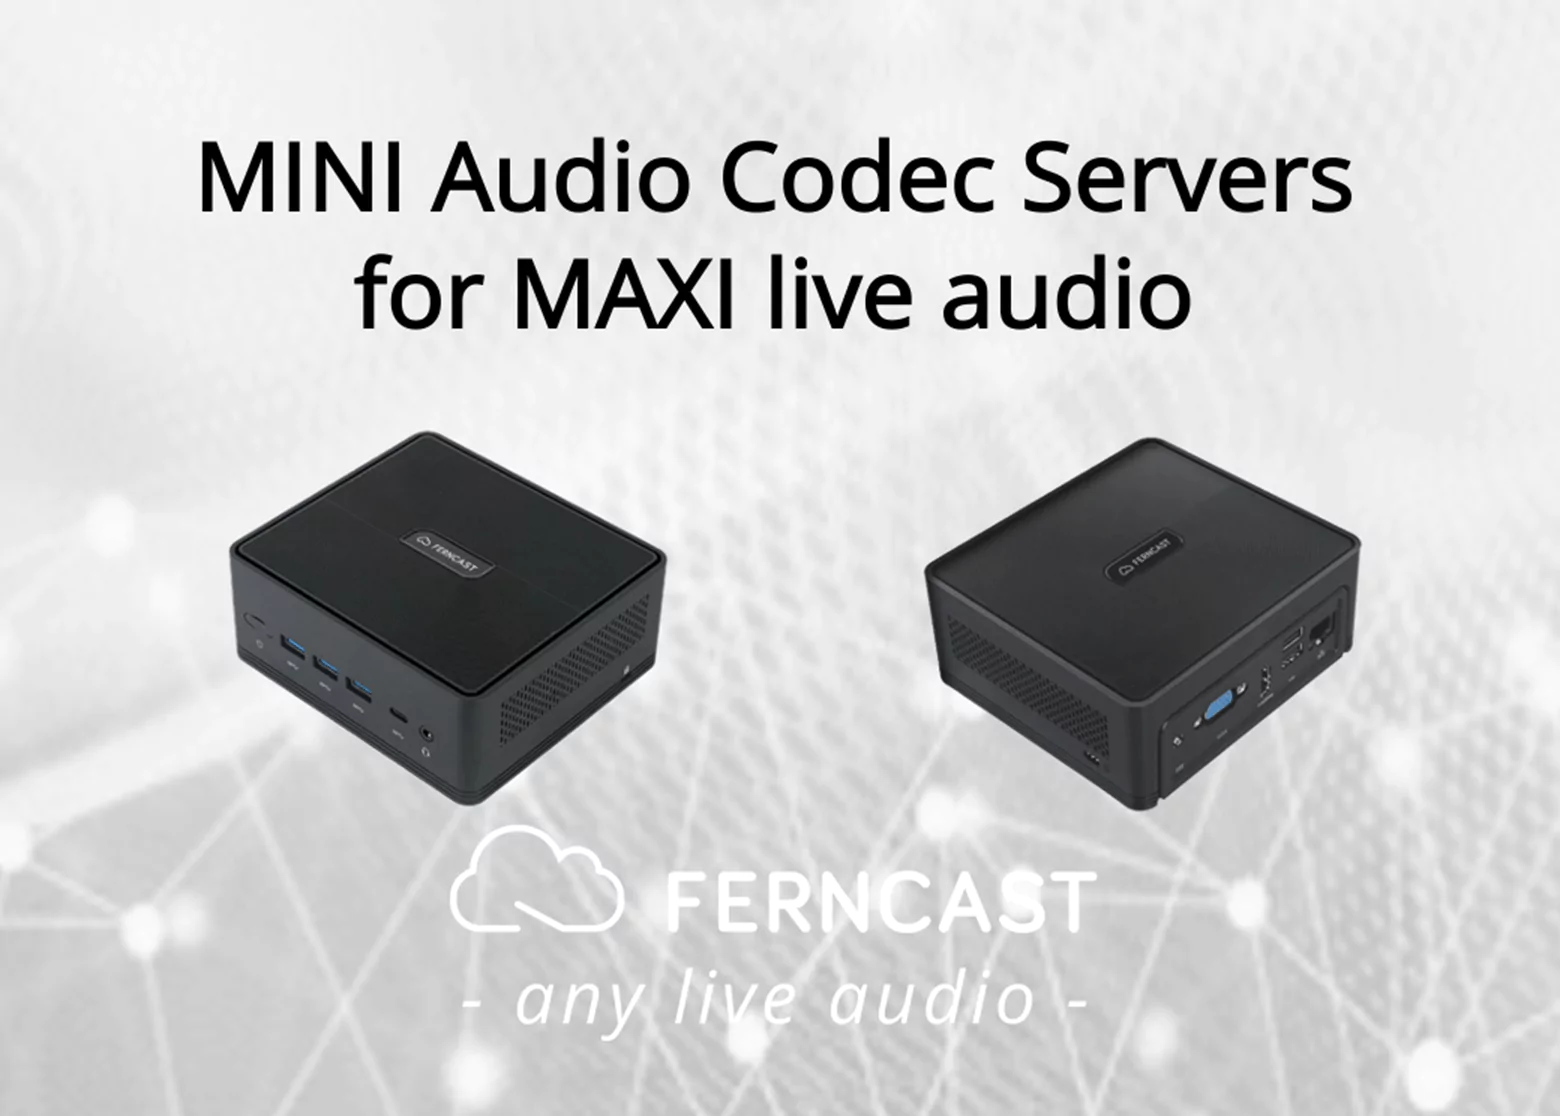 Mini audio codec servers and boxes combined, for maximum live audio